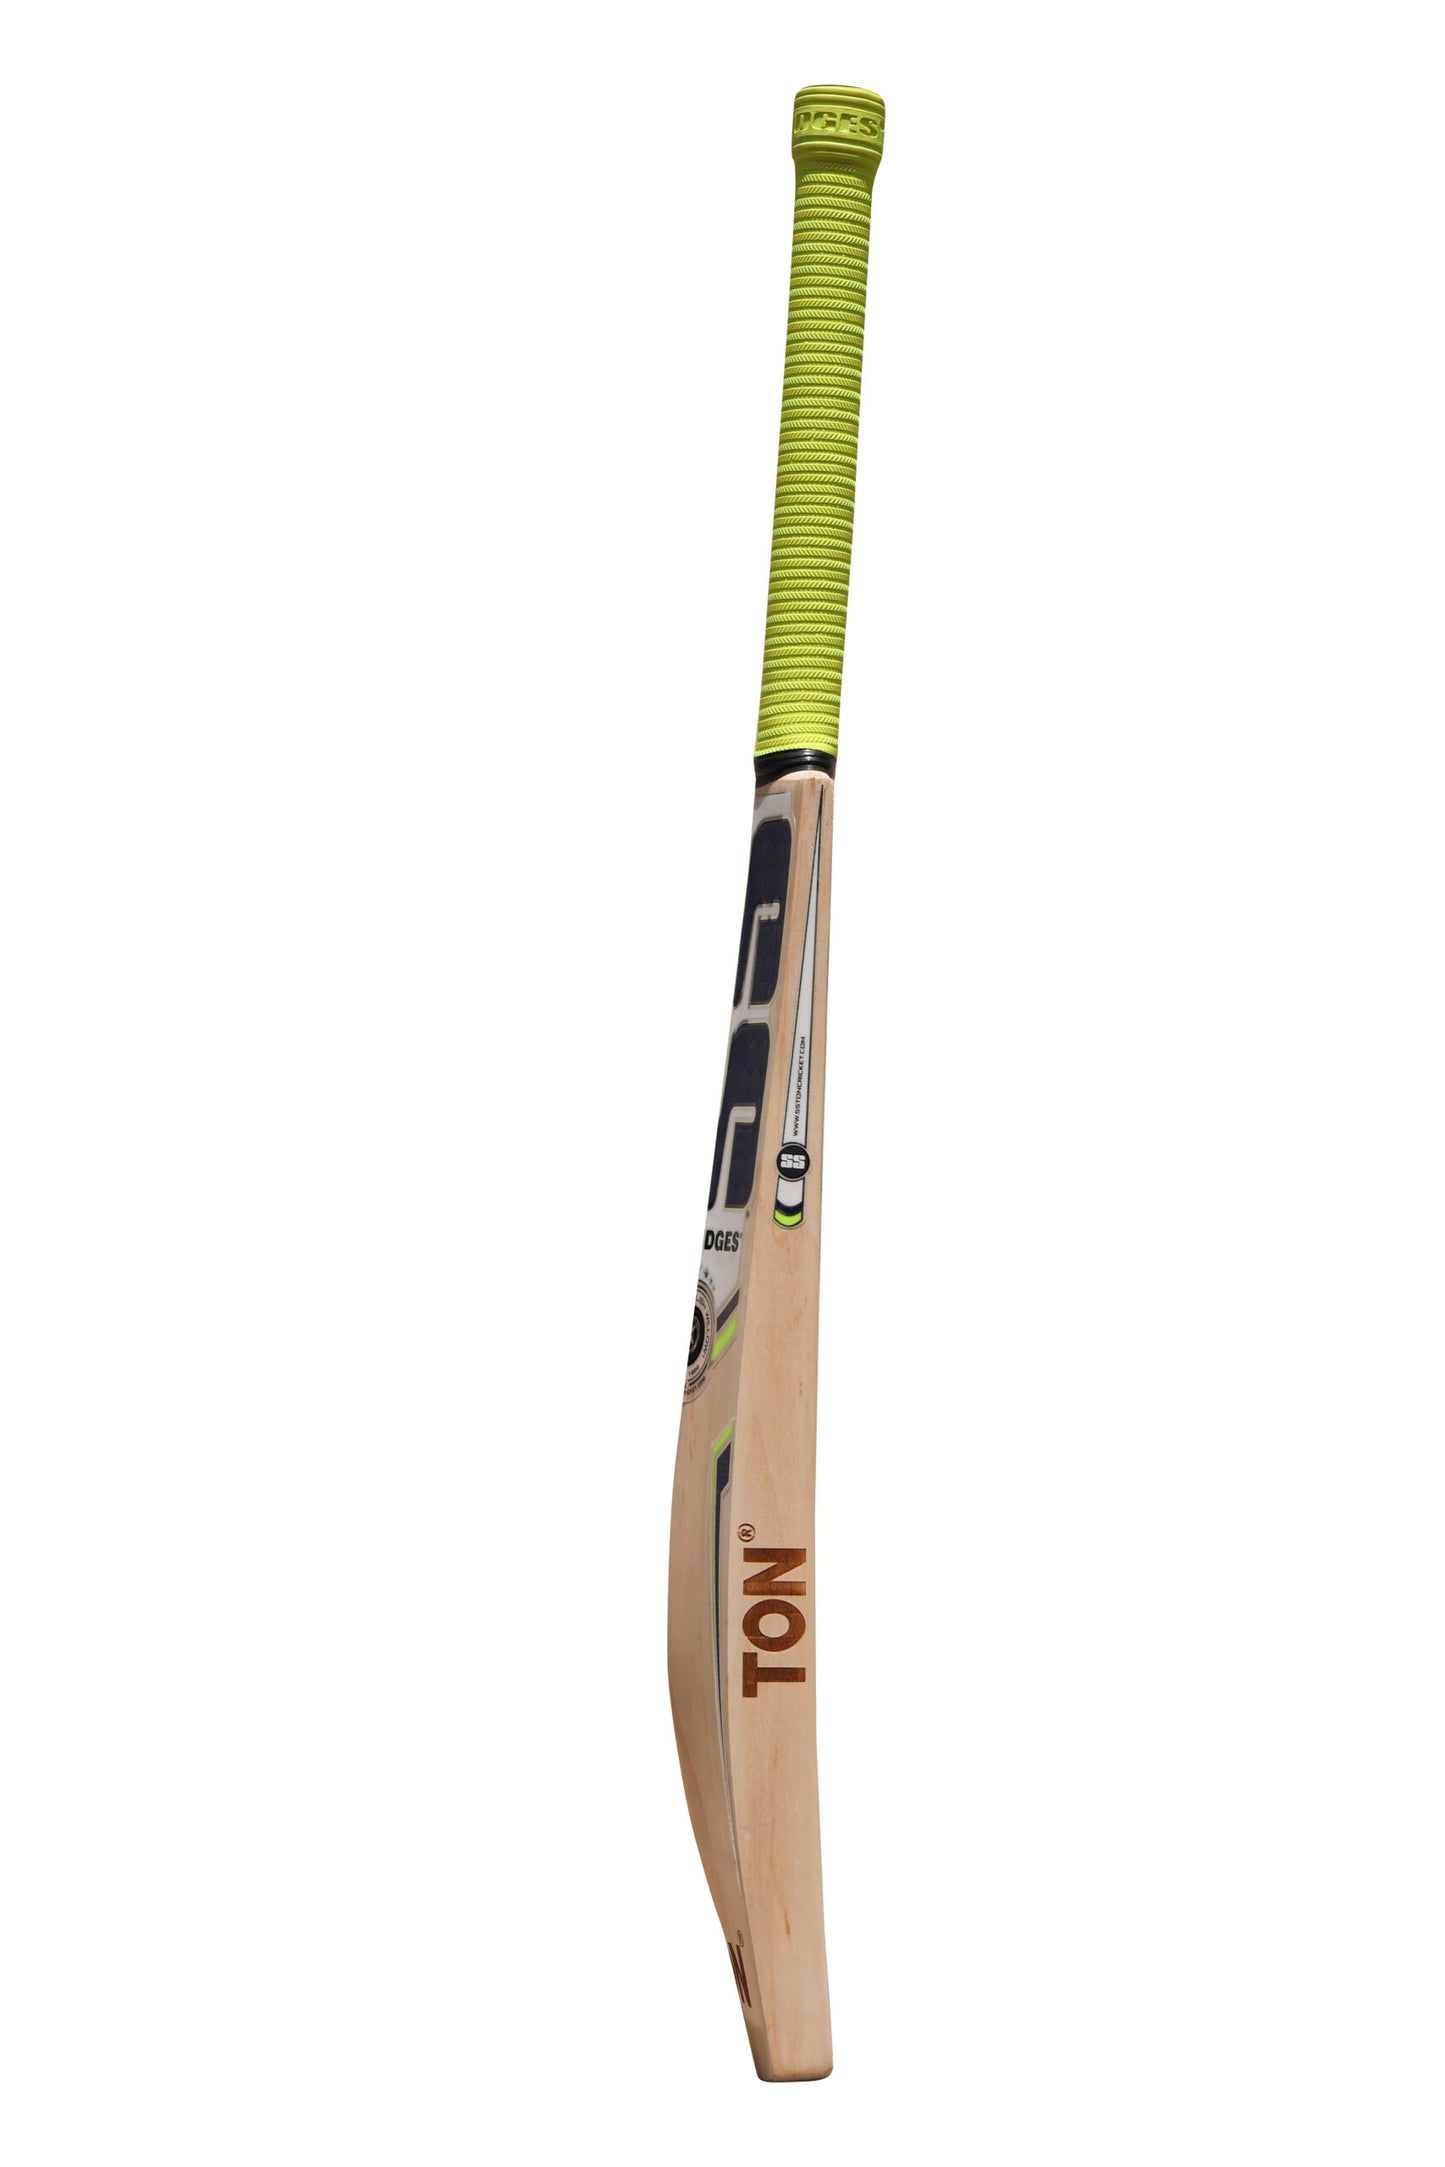 SS Waves English Willow Cricket Bat Standard Size